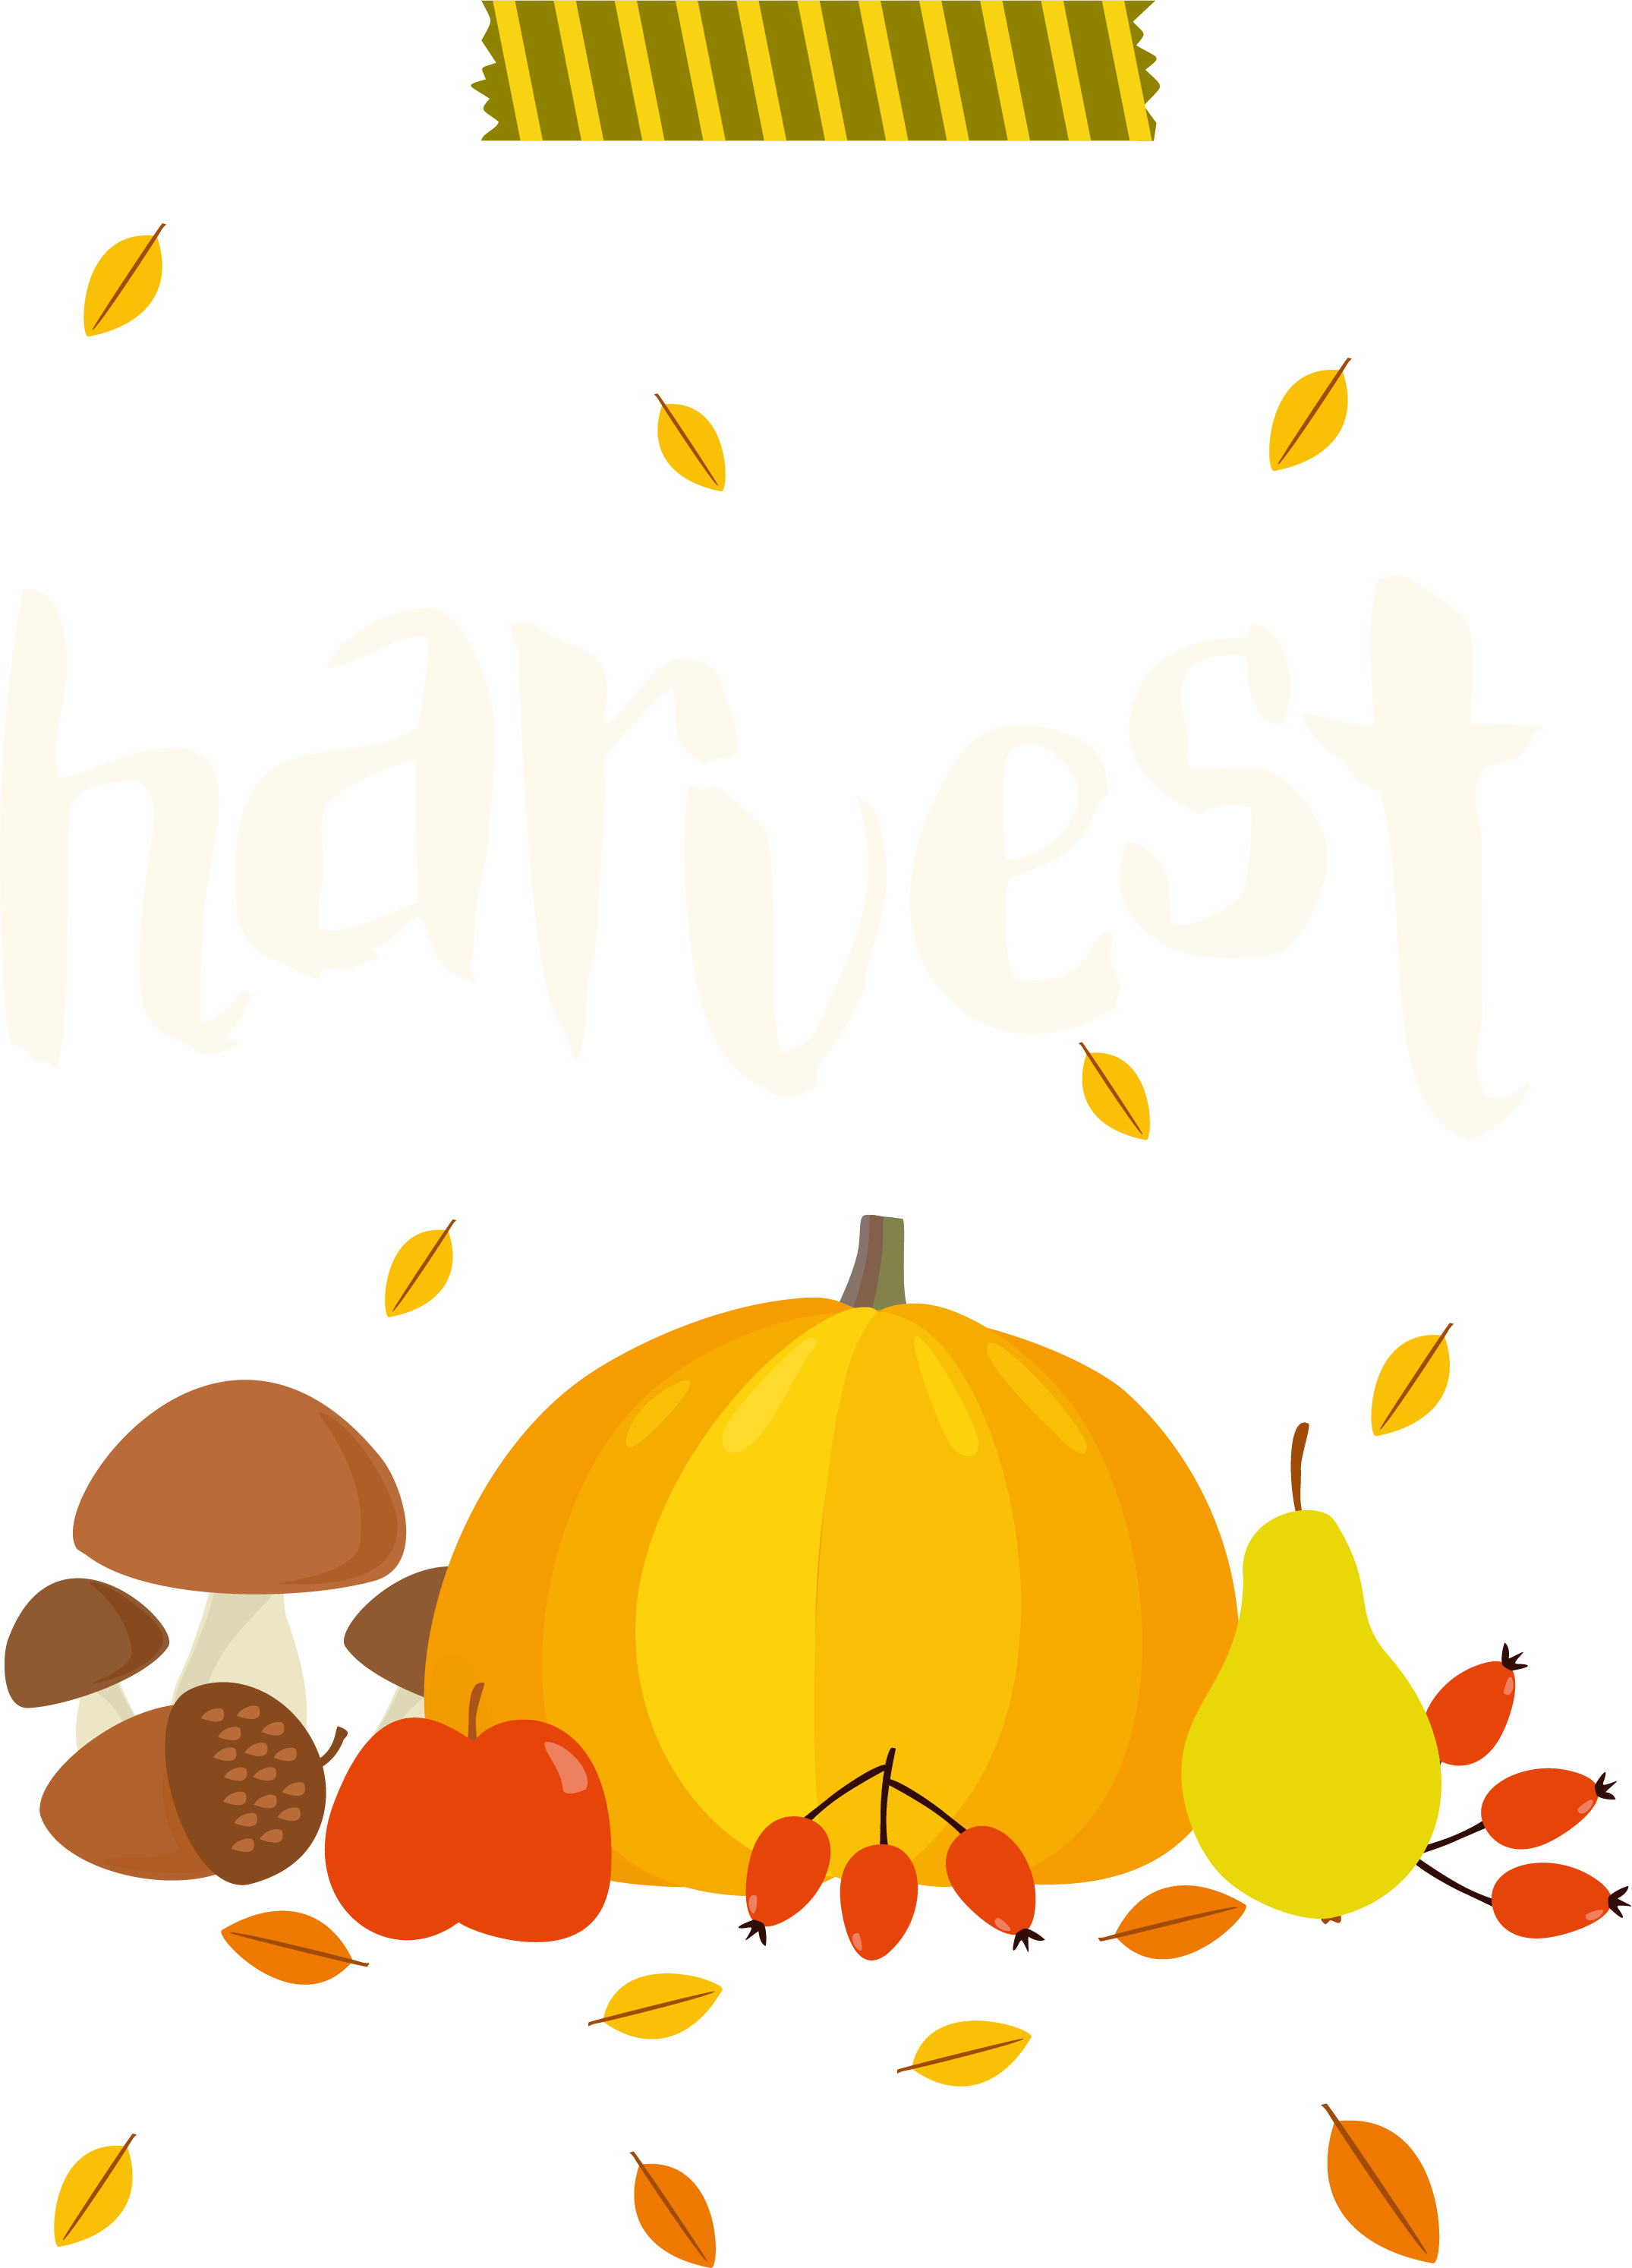 Autumn Harvest Festival - Pumpkin (2150x2987)